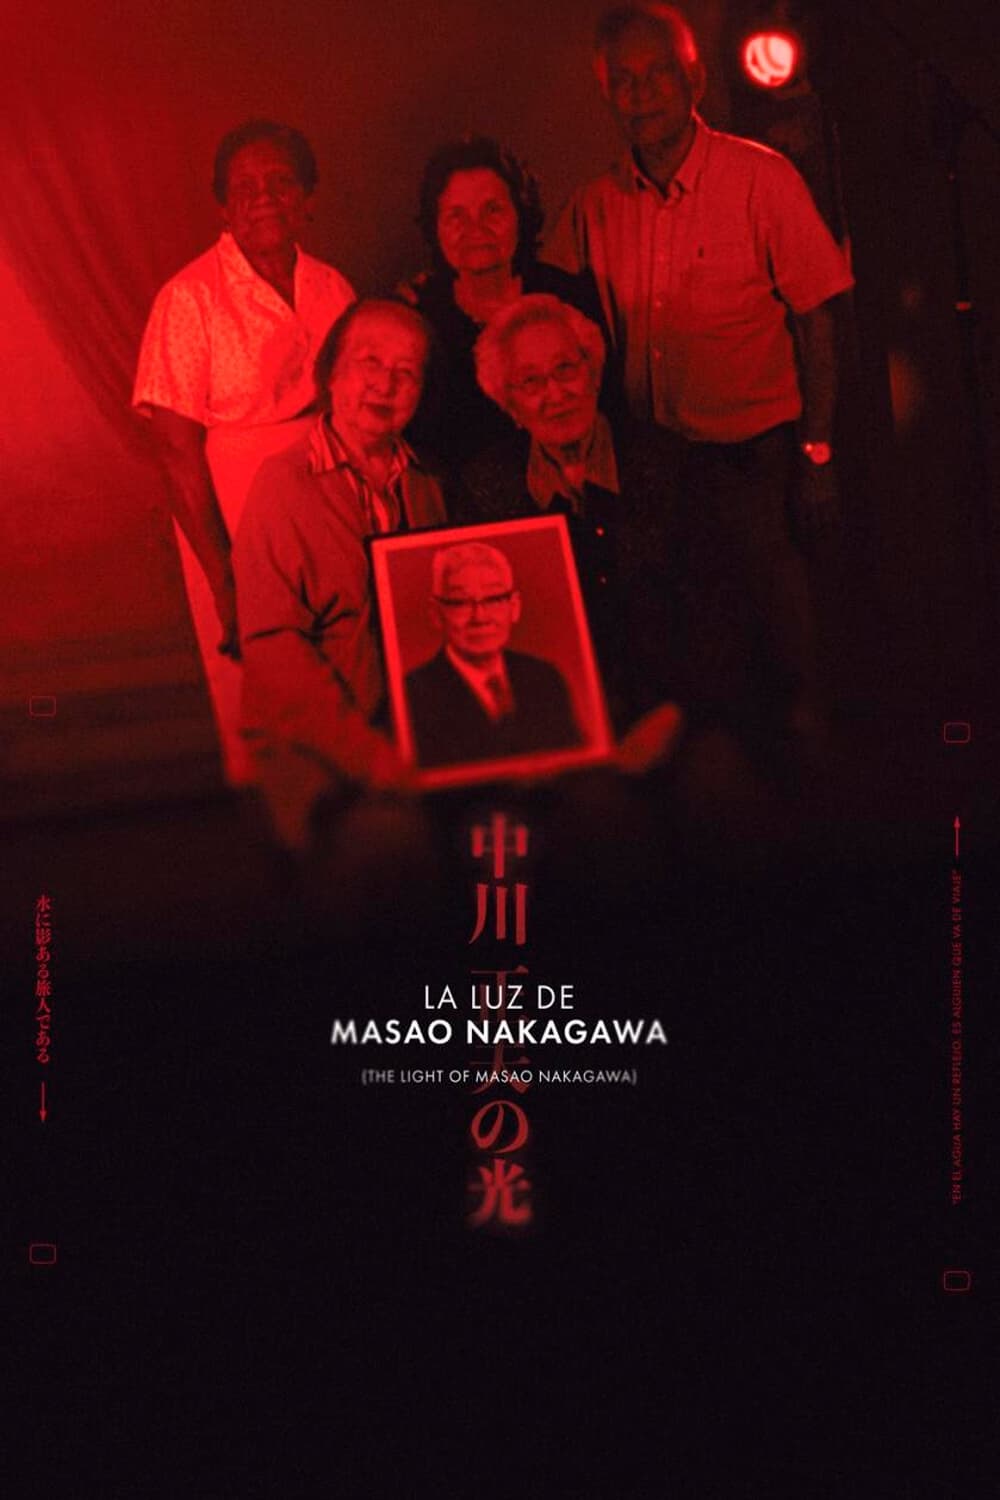 The Light of Masao Nakagawa